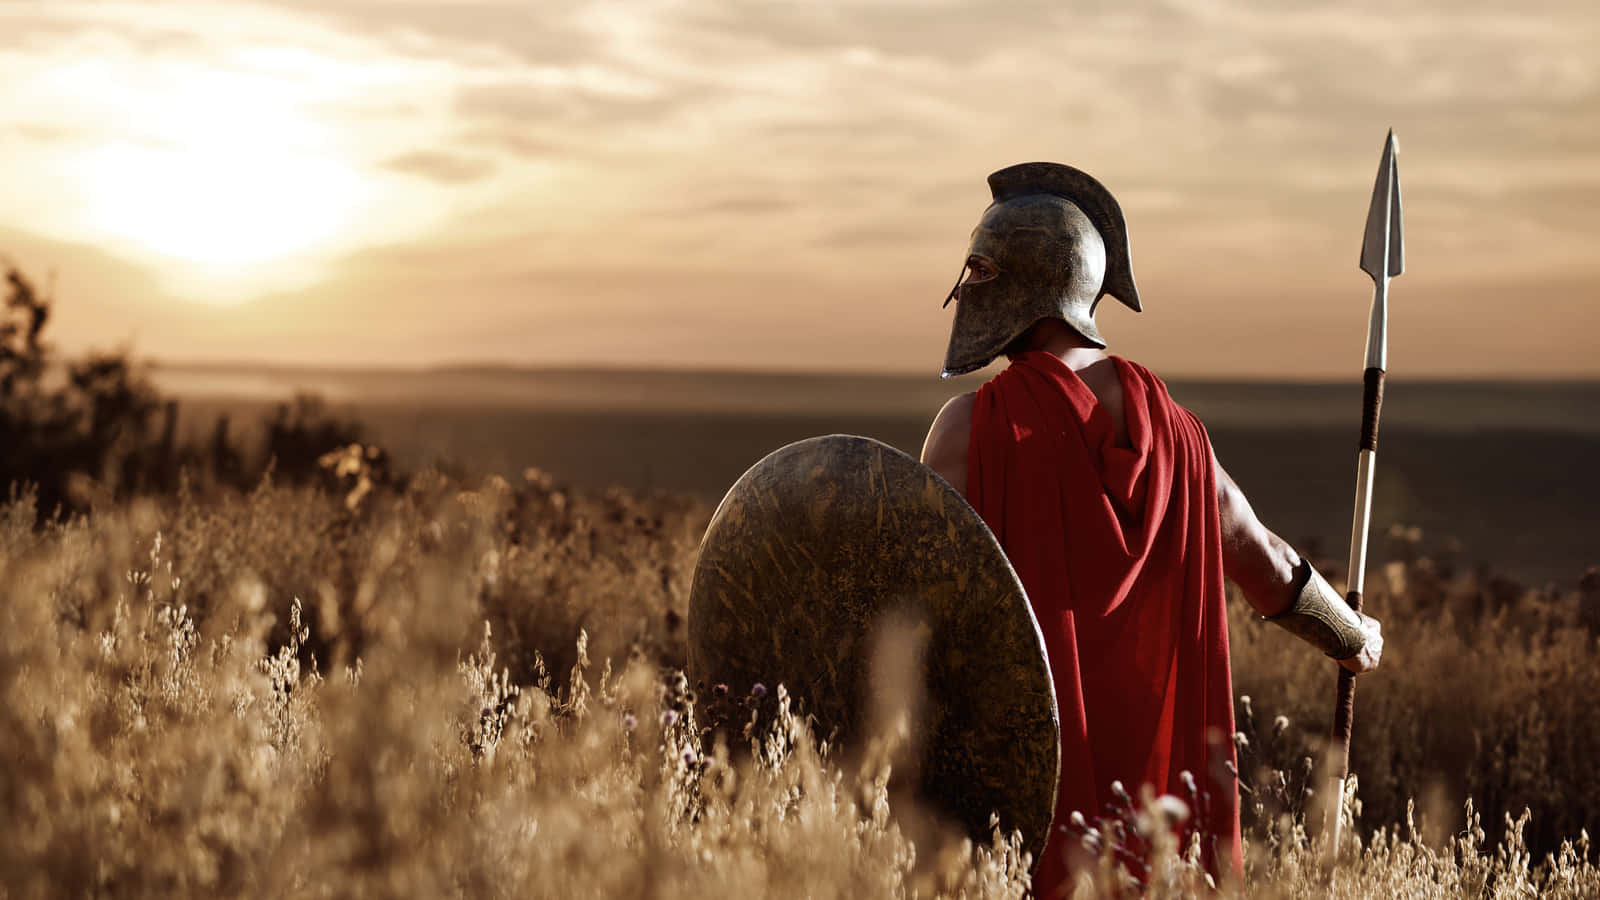 Russell Crowe stars as Maximus Decimus Meridius in Ridley Scott's iconic historical epic, Gladiator